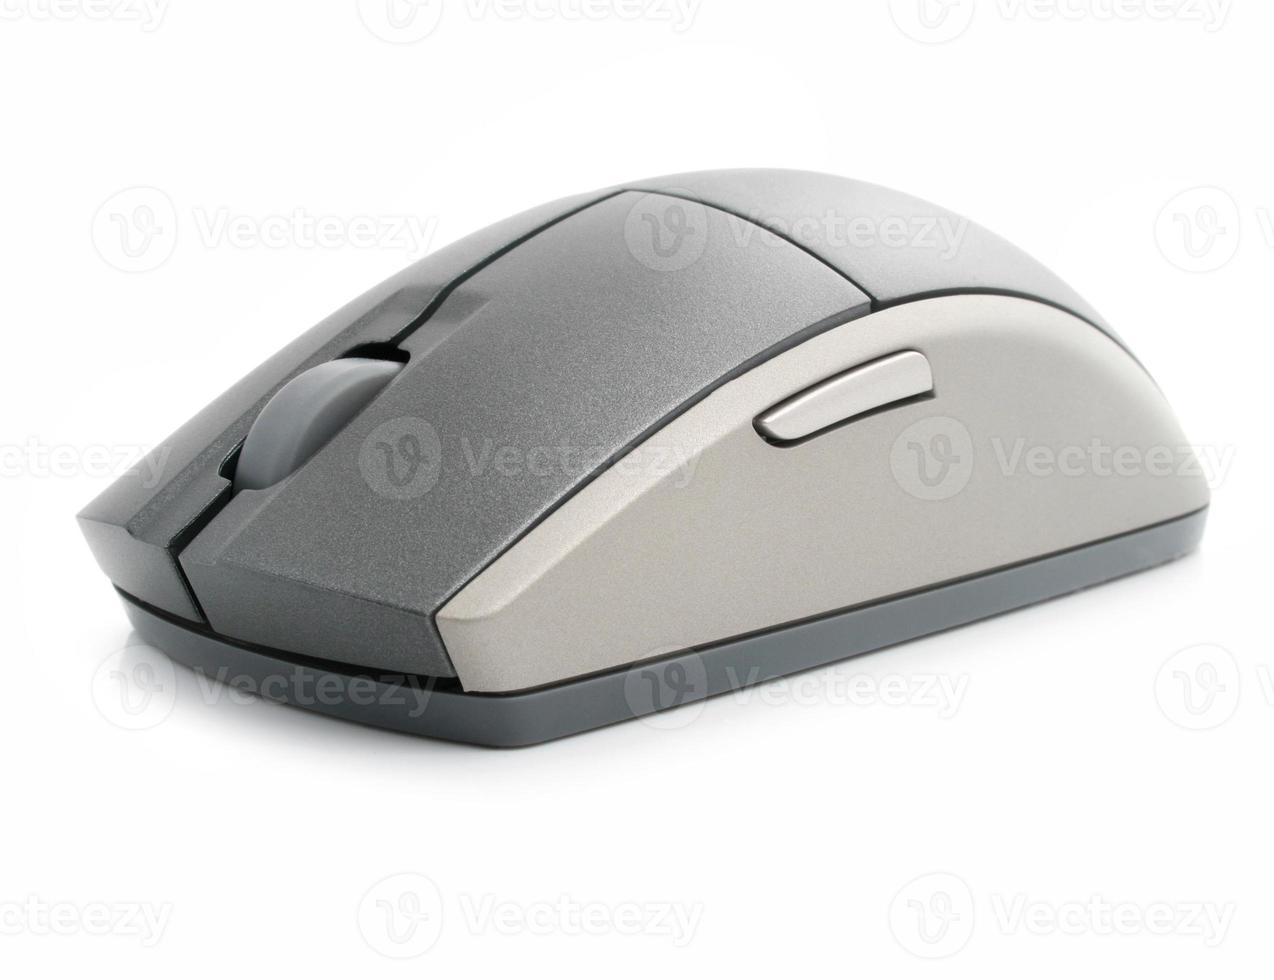 mouse de computador isolado foto